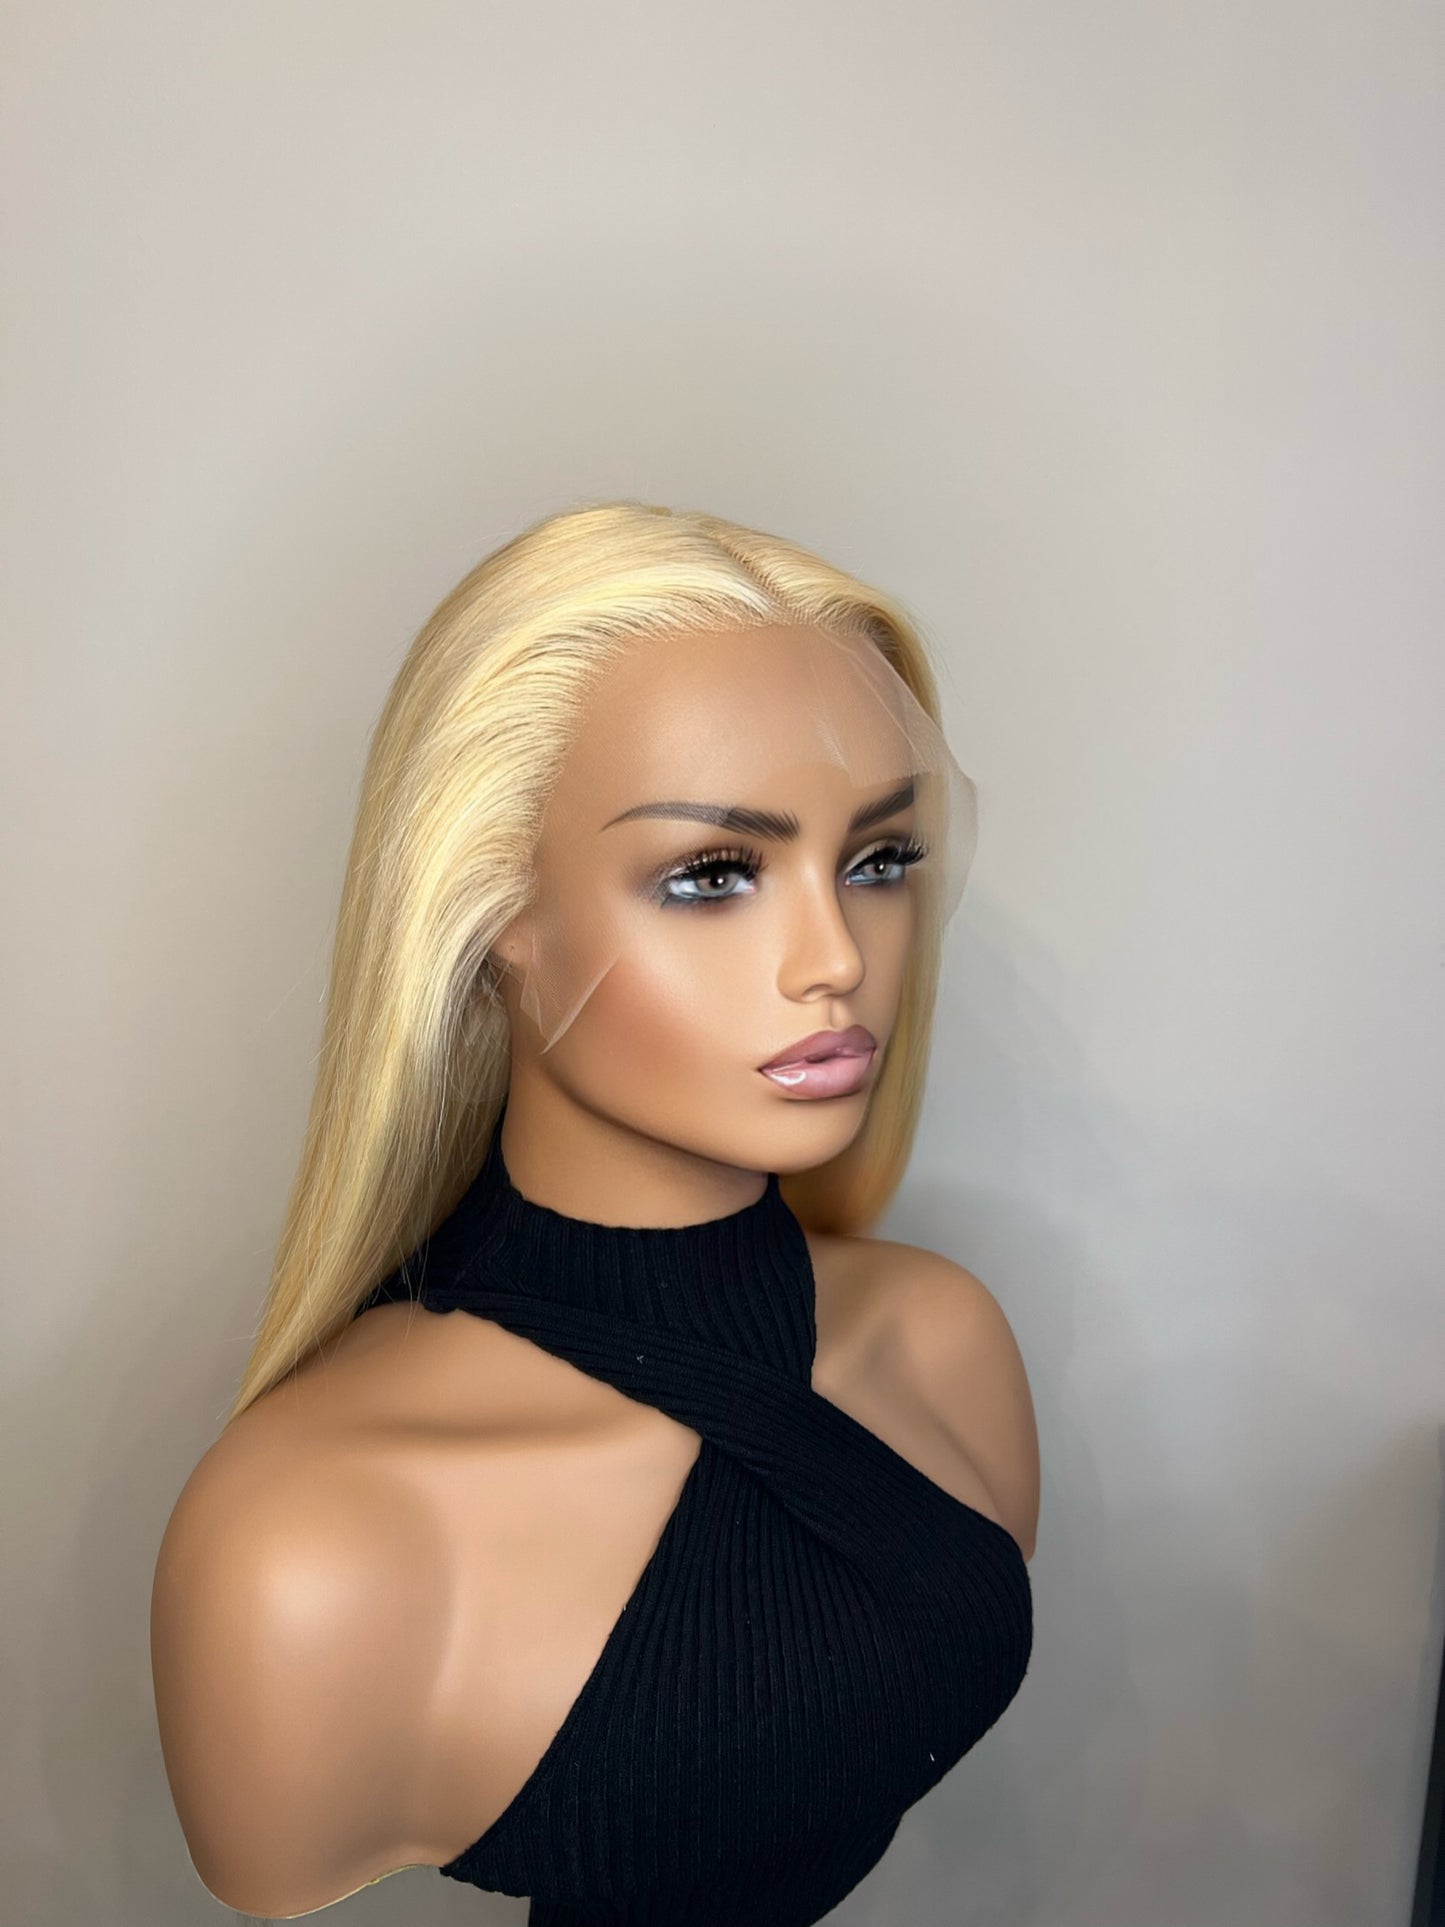 613 Blonde Transparent Lace Front Wig